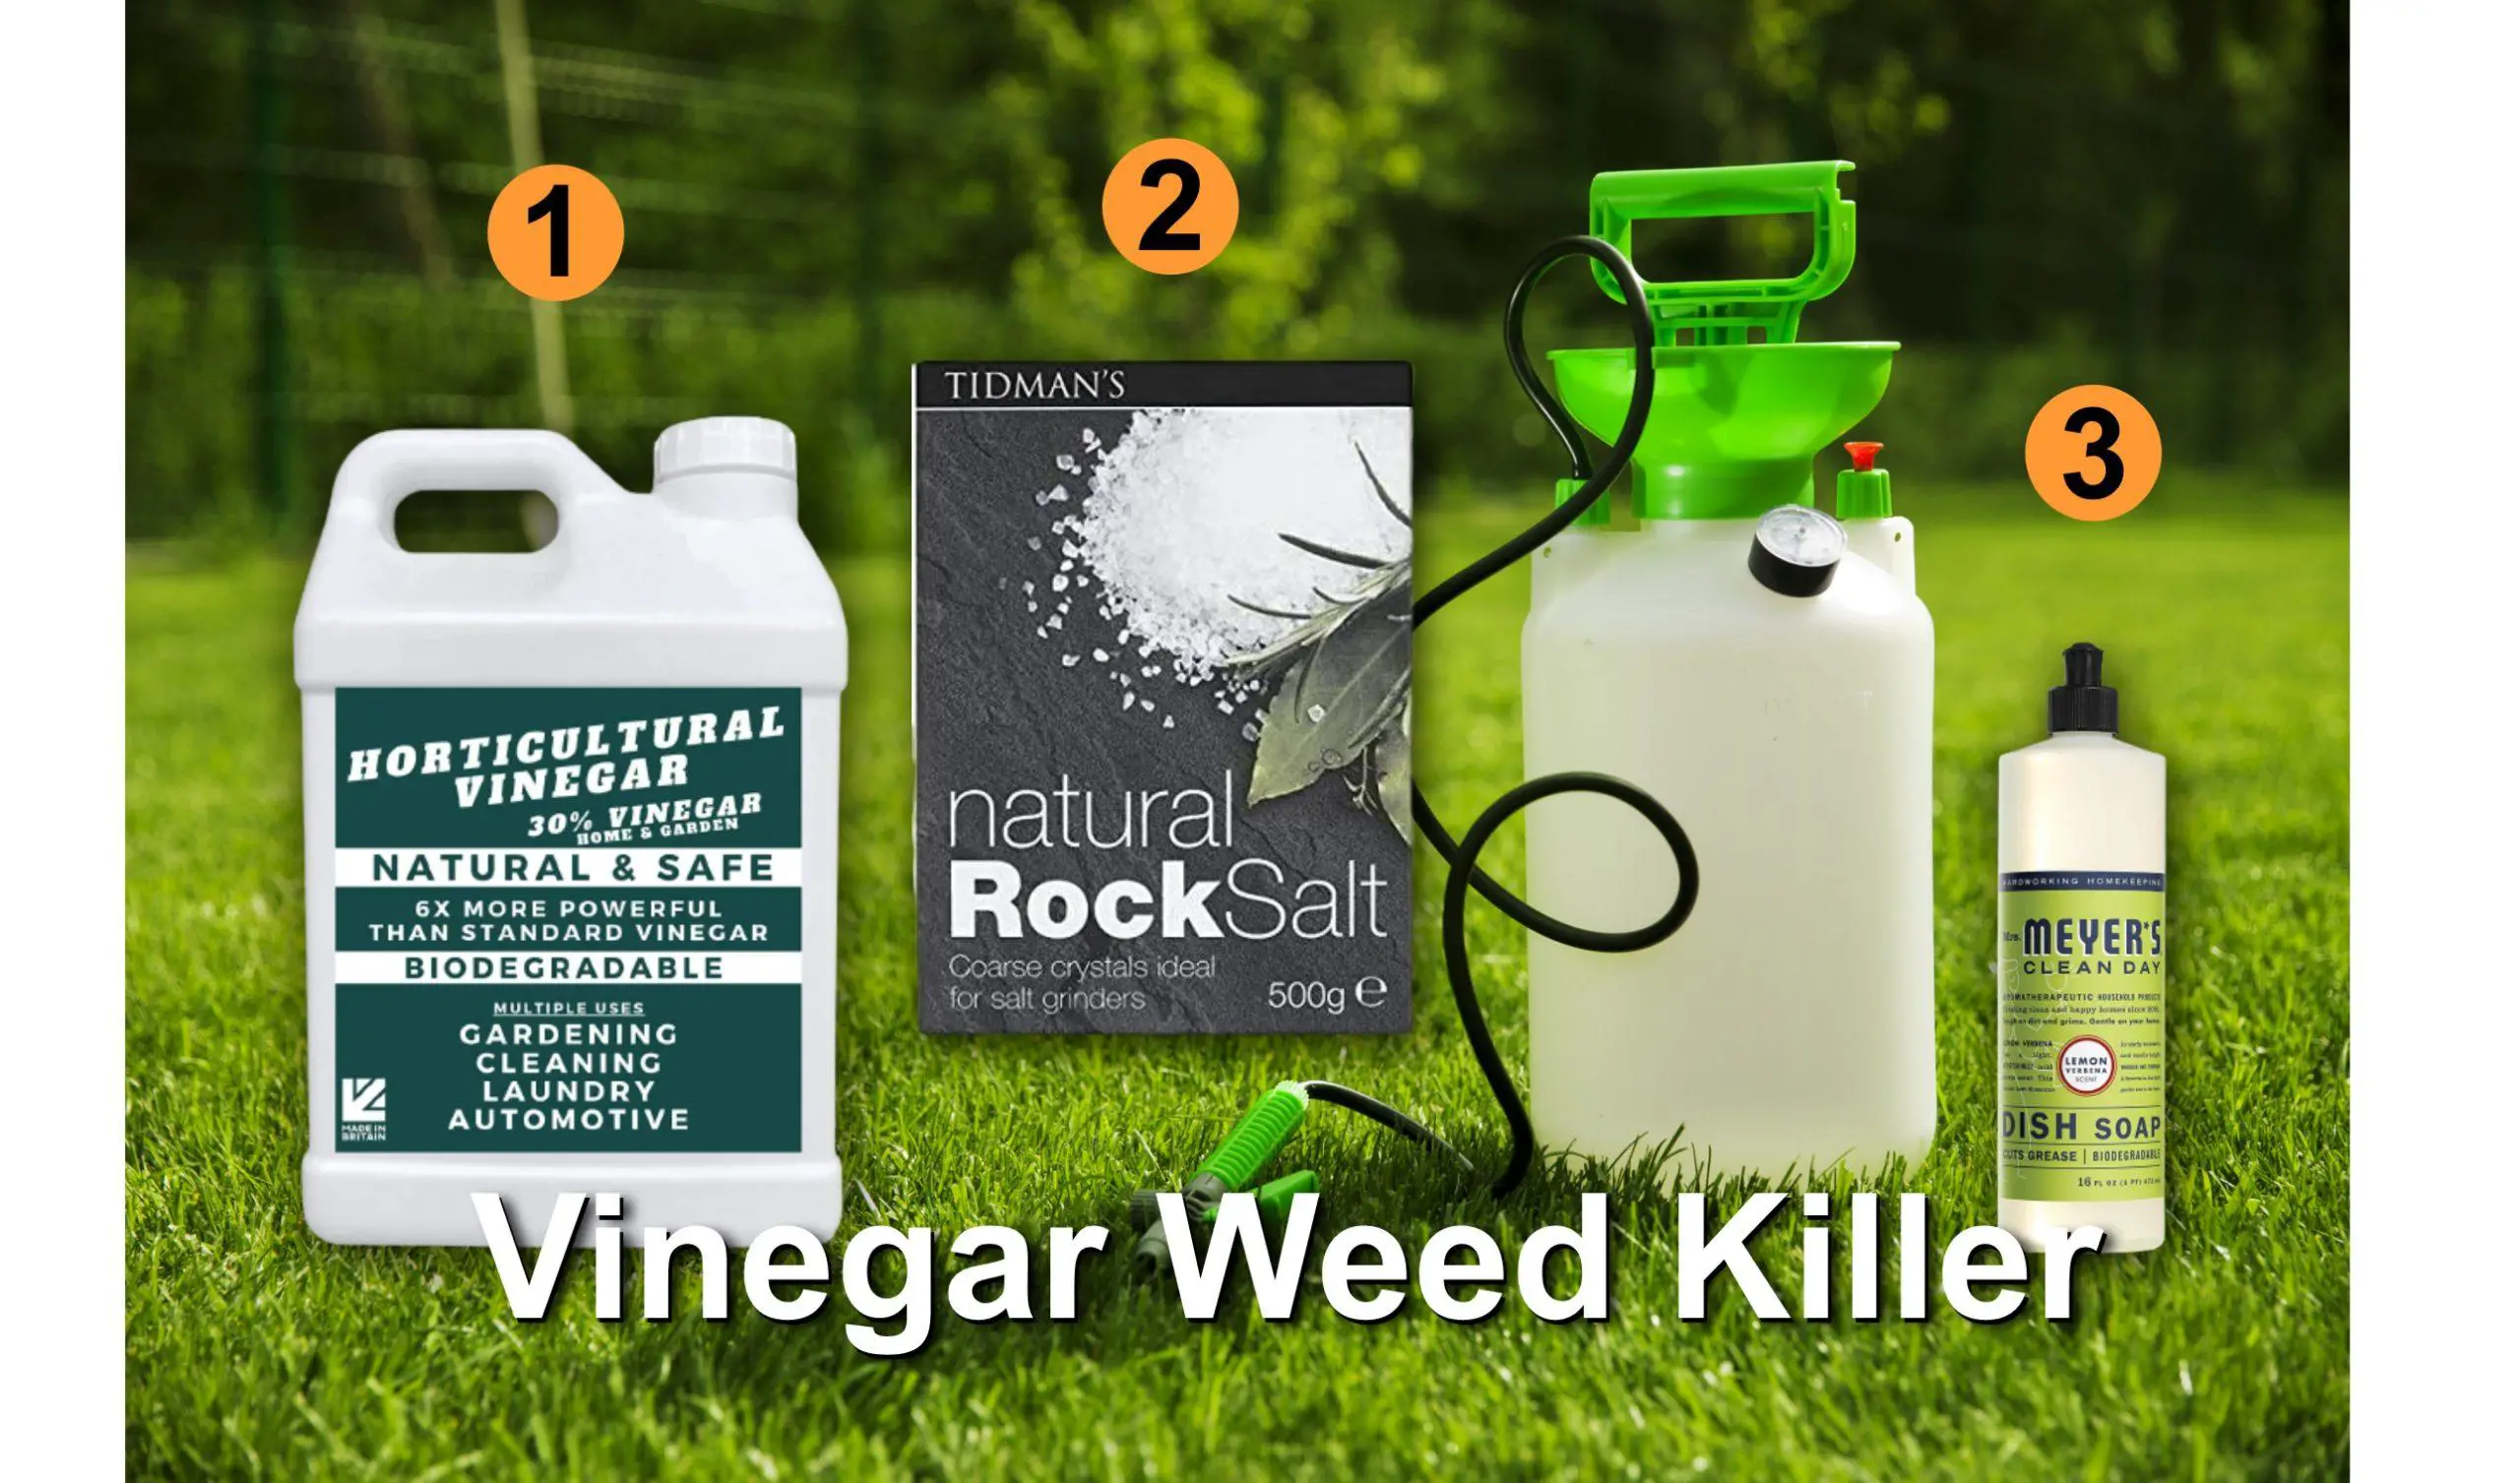 Vinegar weed killer scaled